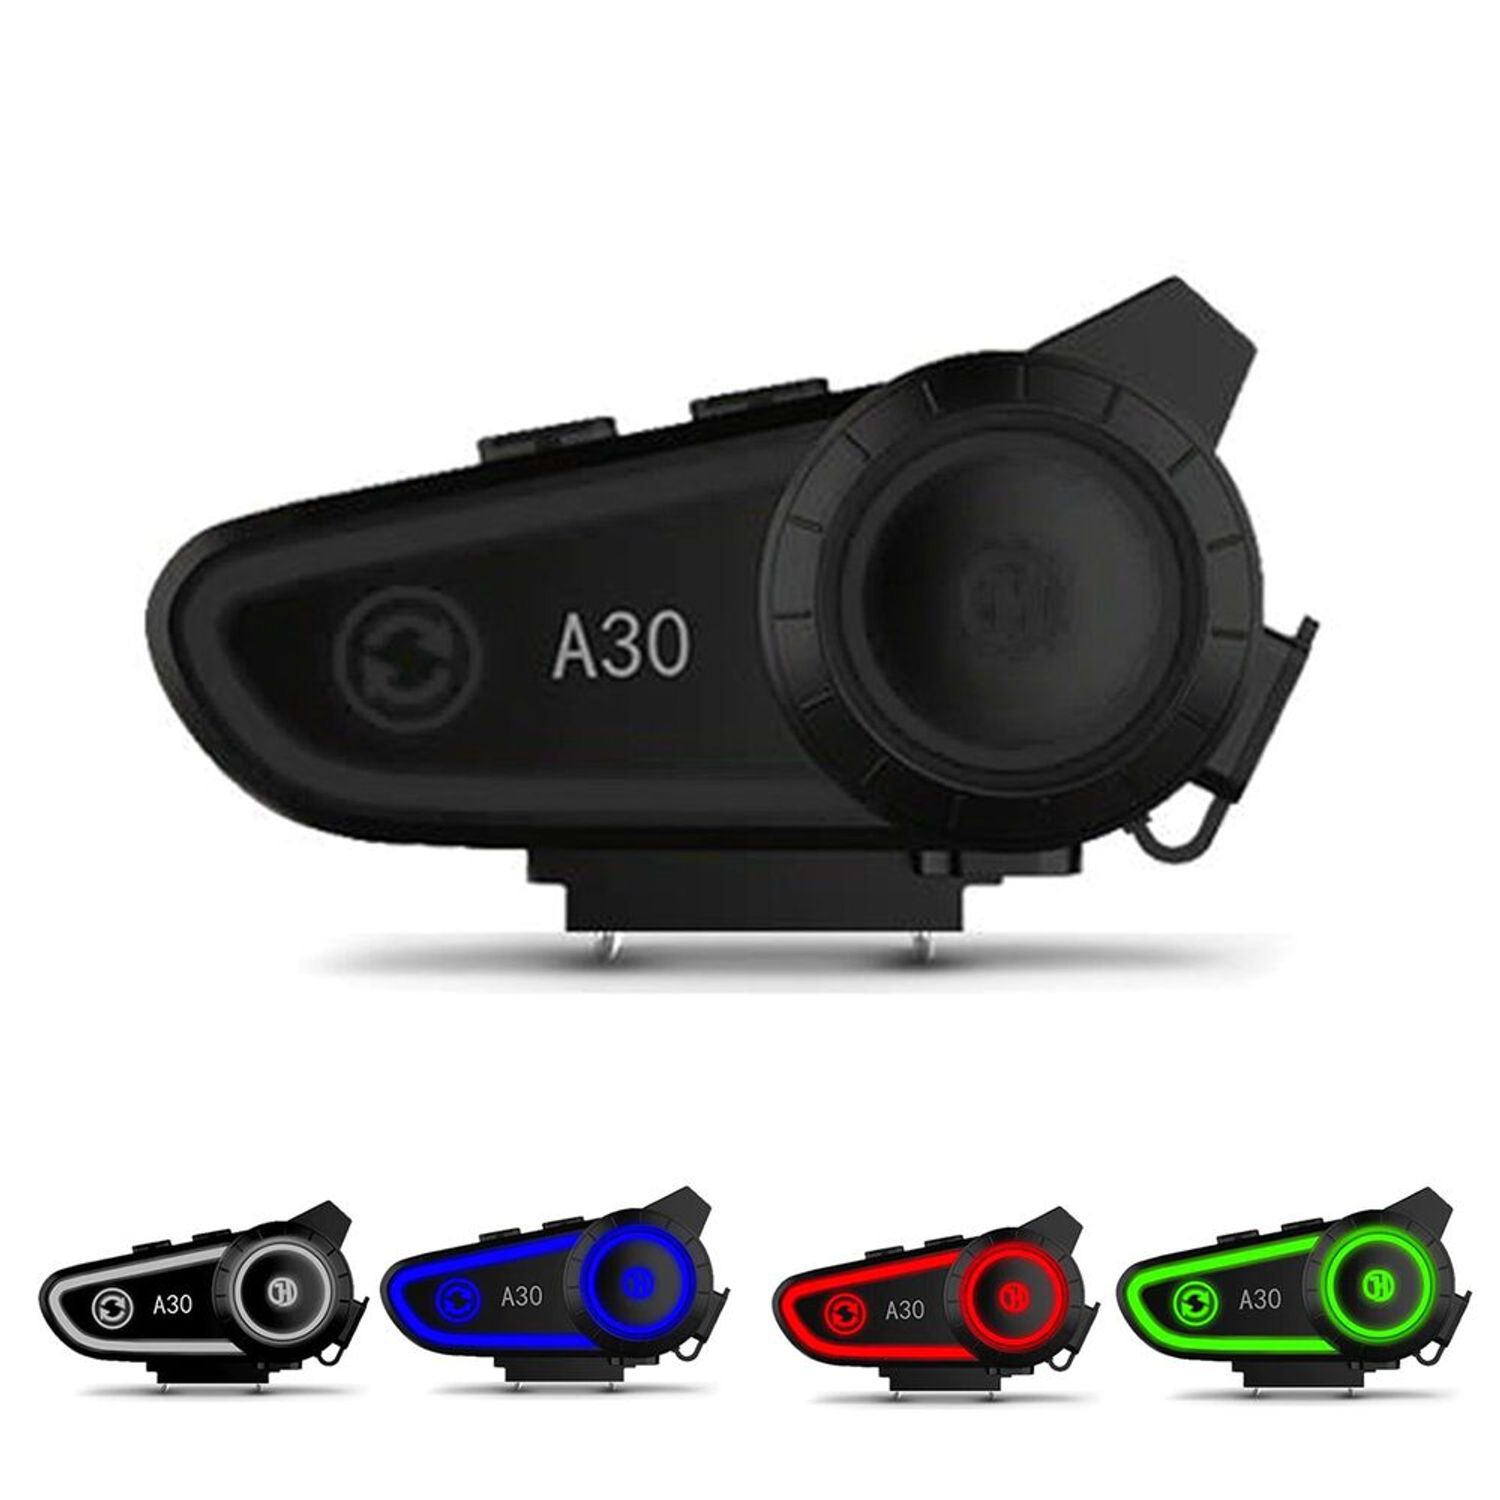 Audifonos Bluetooth para Casco Moto Auriculares Inalambrico I Oechsle -  Oechsle